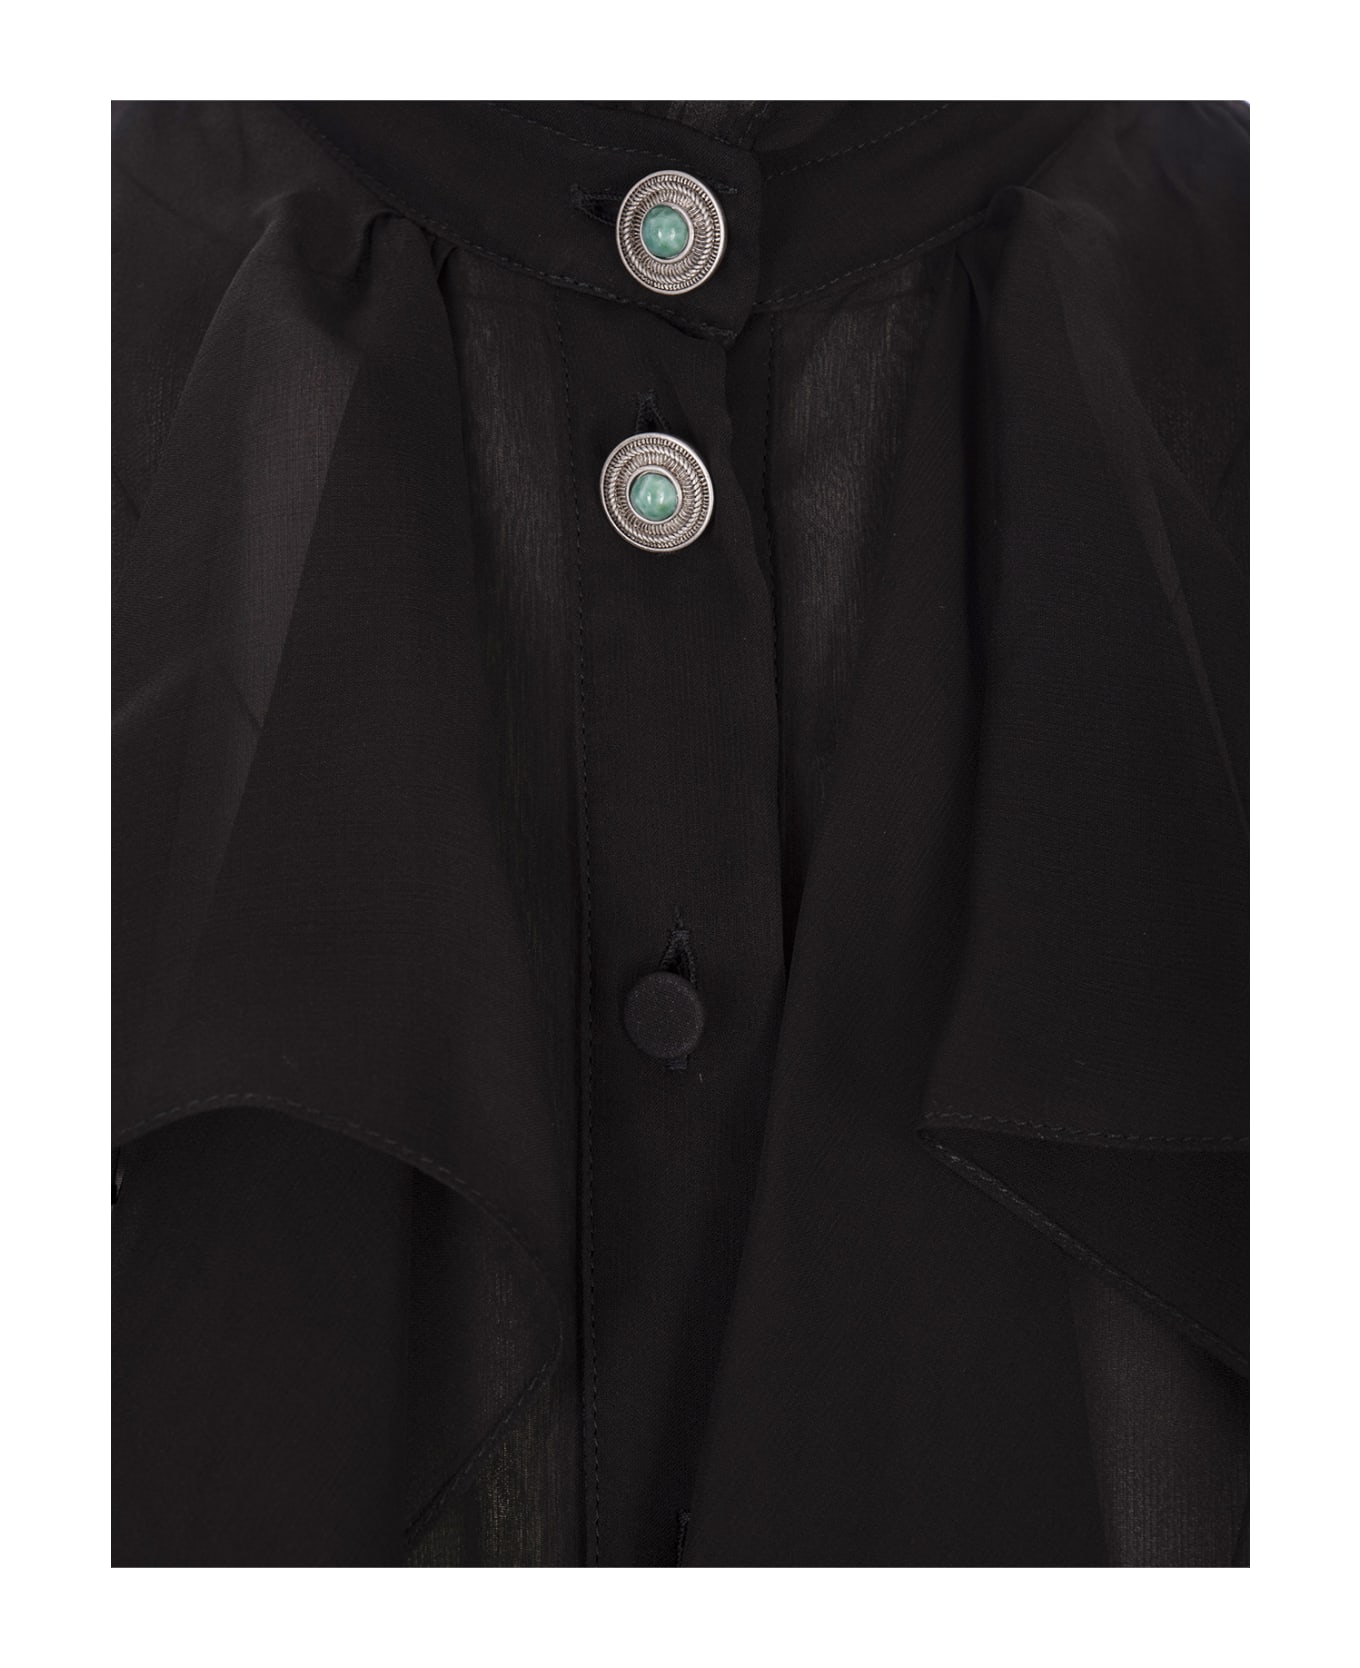 Roberto Cavalli Black Long Dress With Ruffles - Nero ワンピース＆ドレス